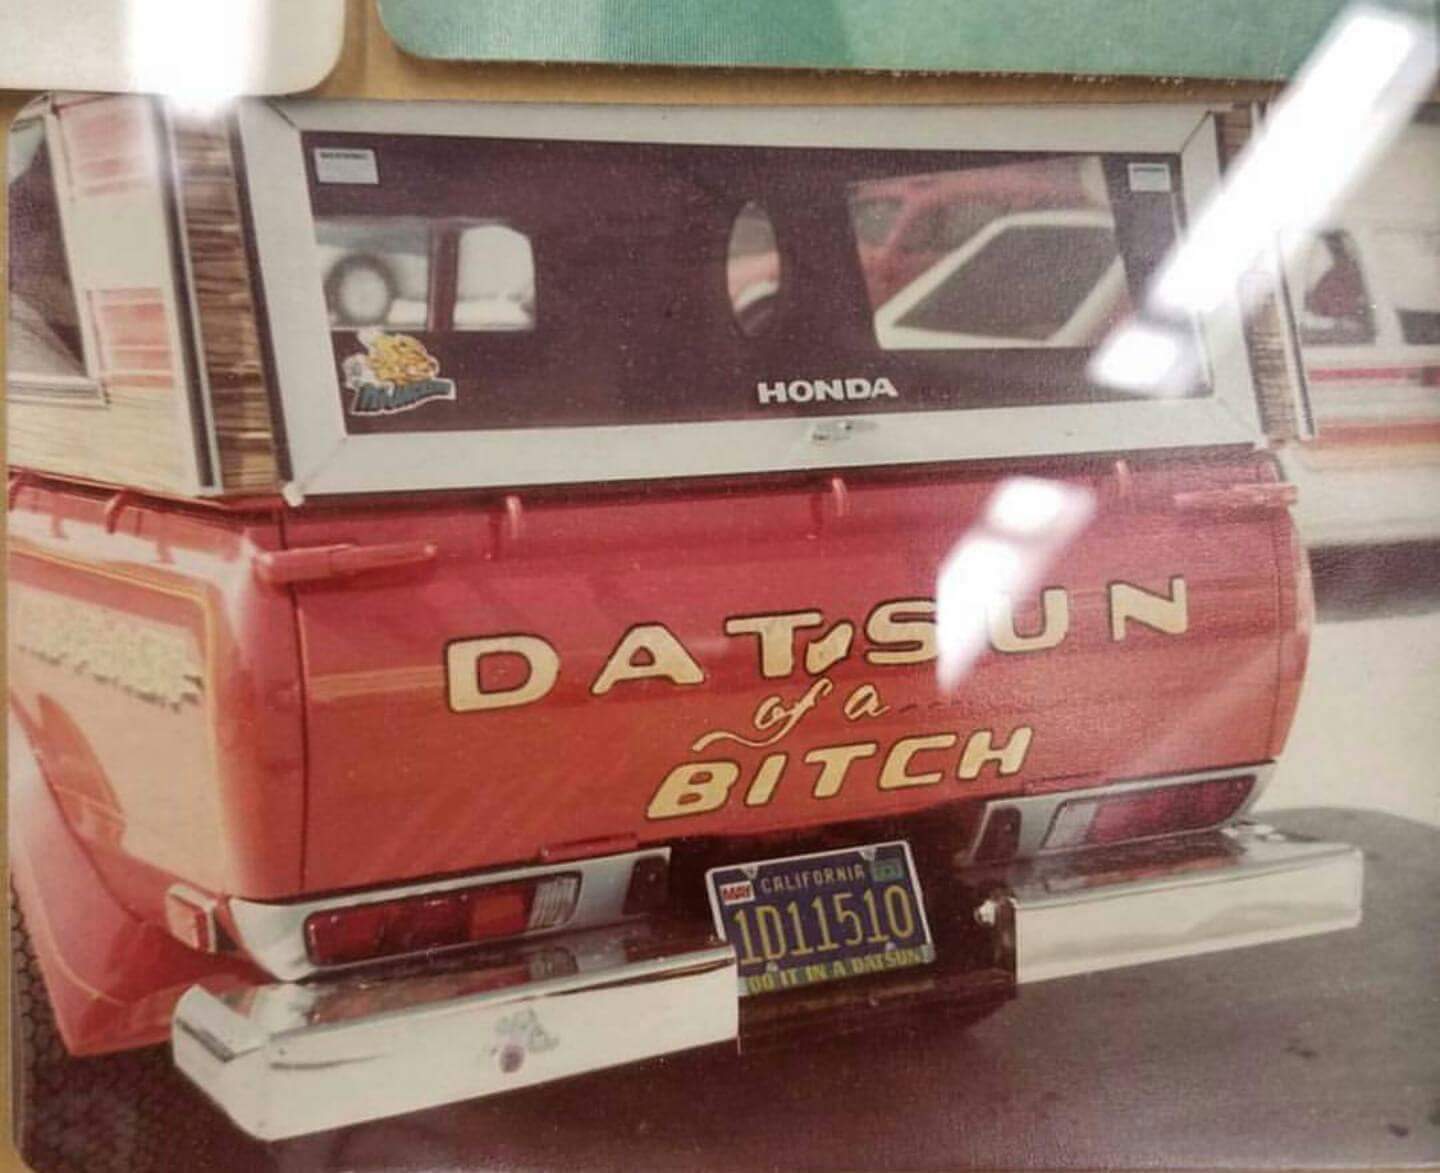 datsun meme - Honda Datsun Bitch Mo Californir 11011510